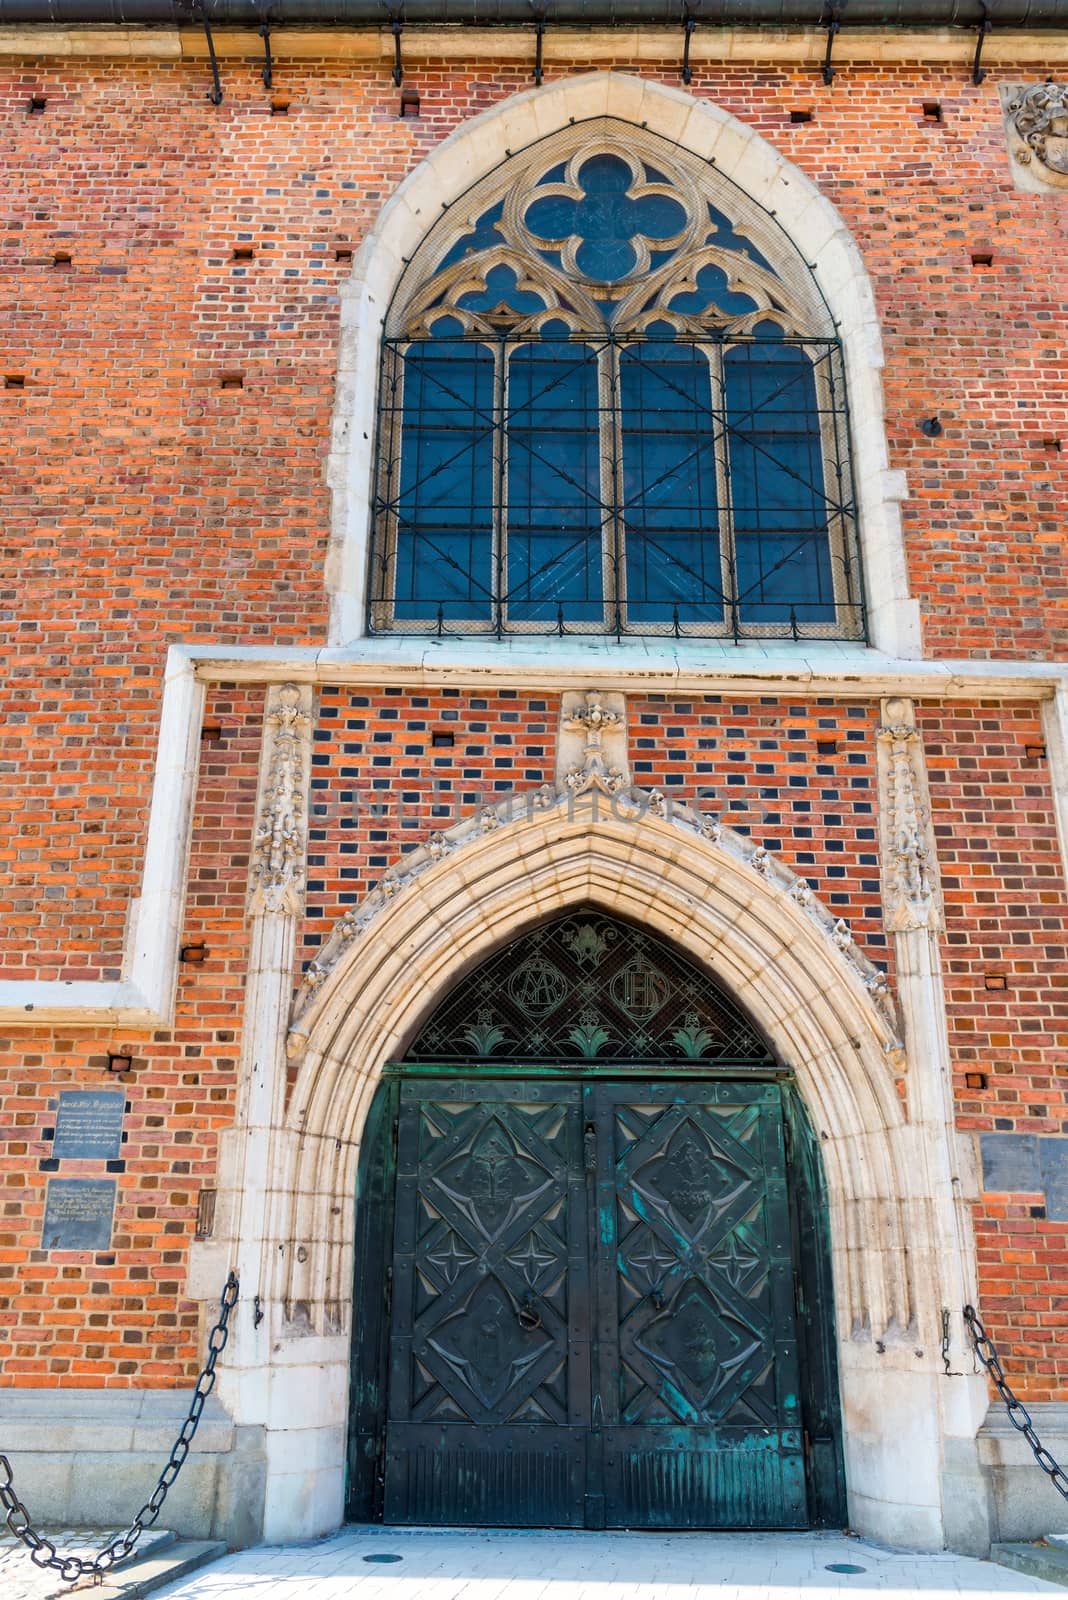 entrance to the brick catholic church massive metal gates